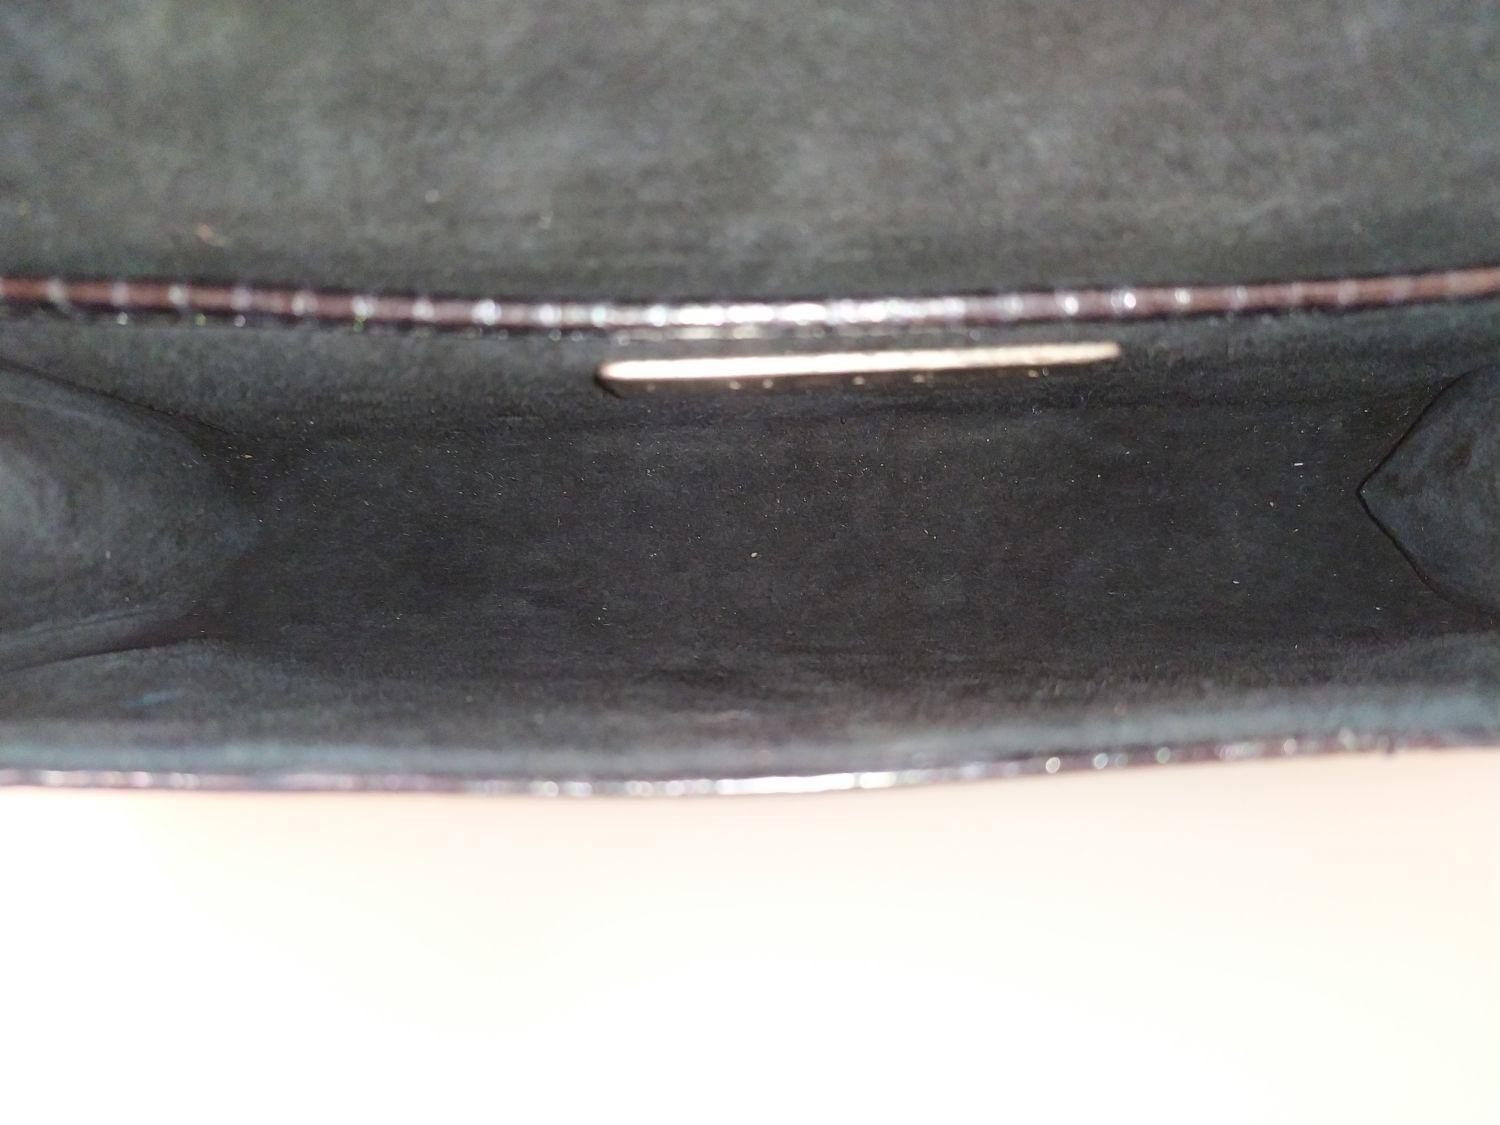 Misela Reptile Printed Leather Bag In Excellent Condition In Gazzaniga (BG), IT